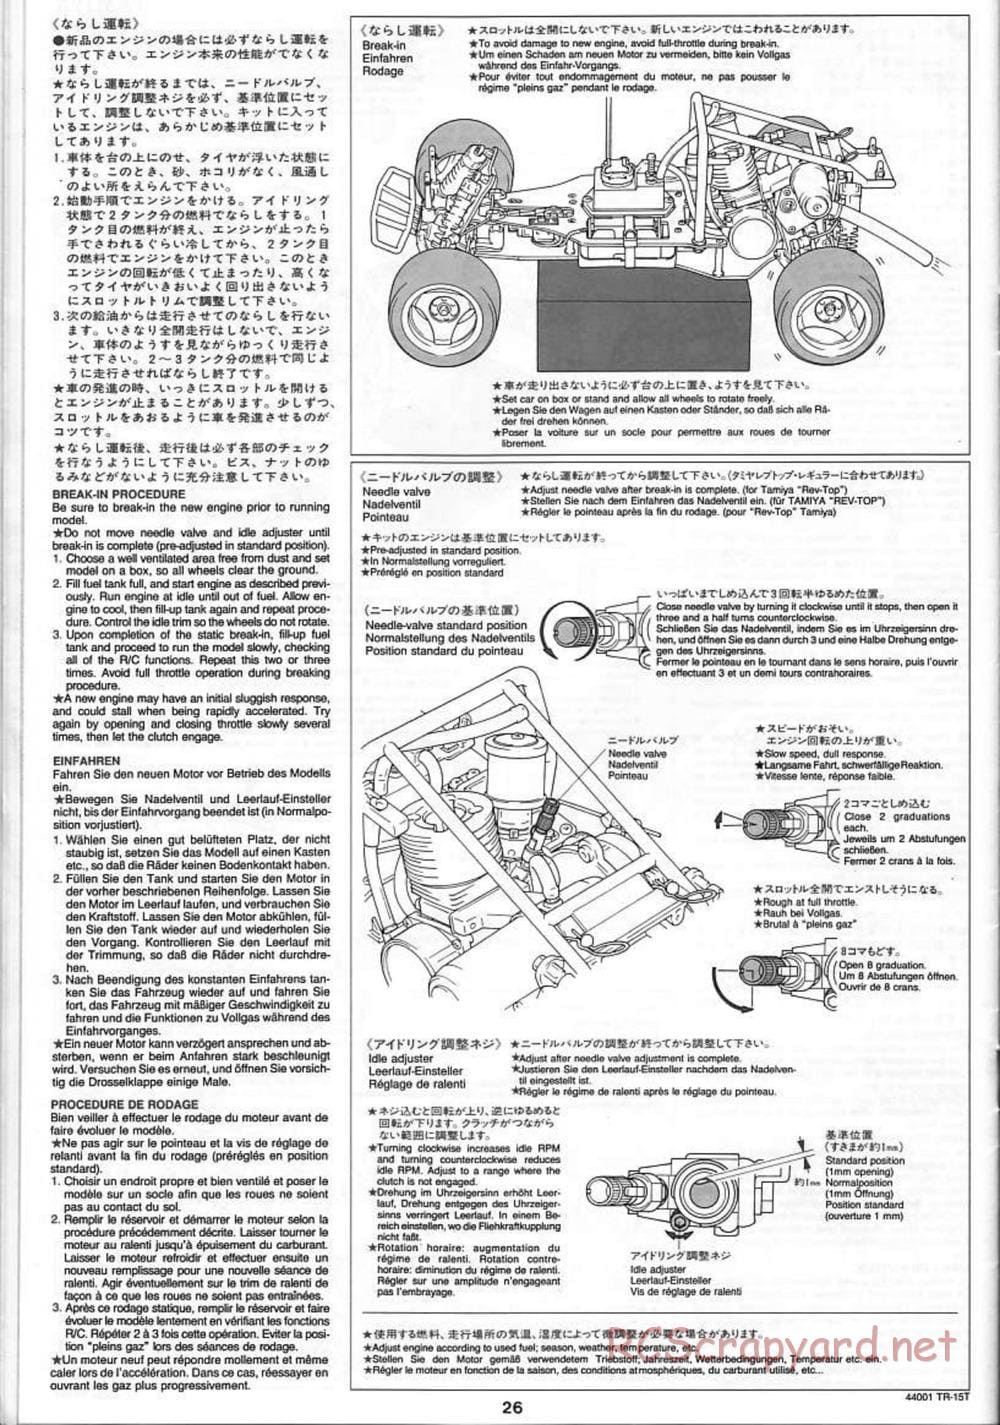 Tamiya - Stadium Racing Truck TR-15T Chassis - Manual - Page 26